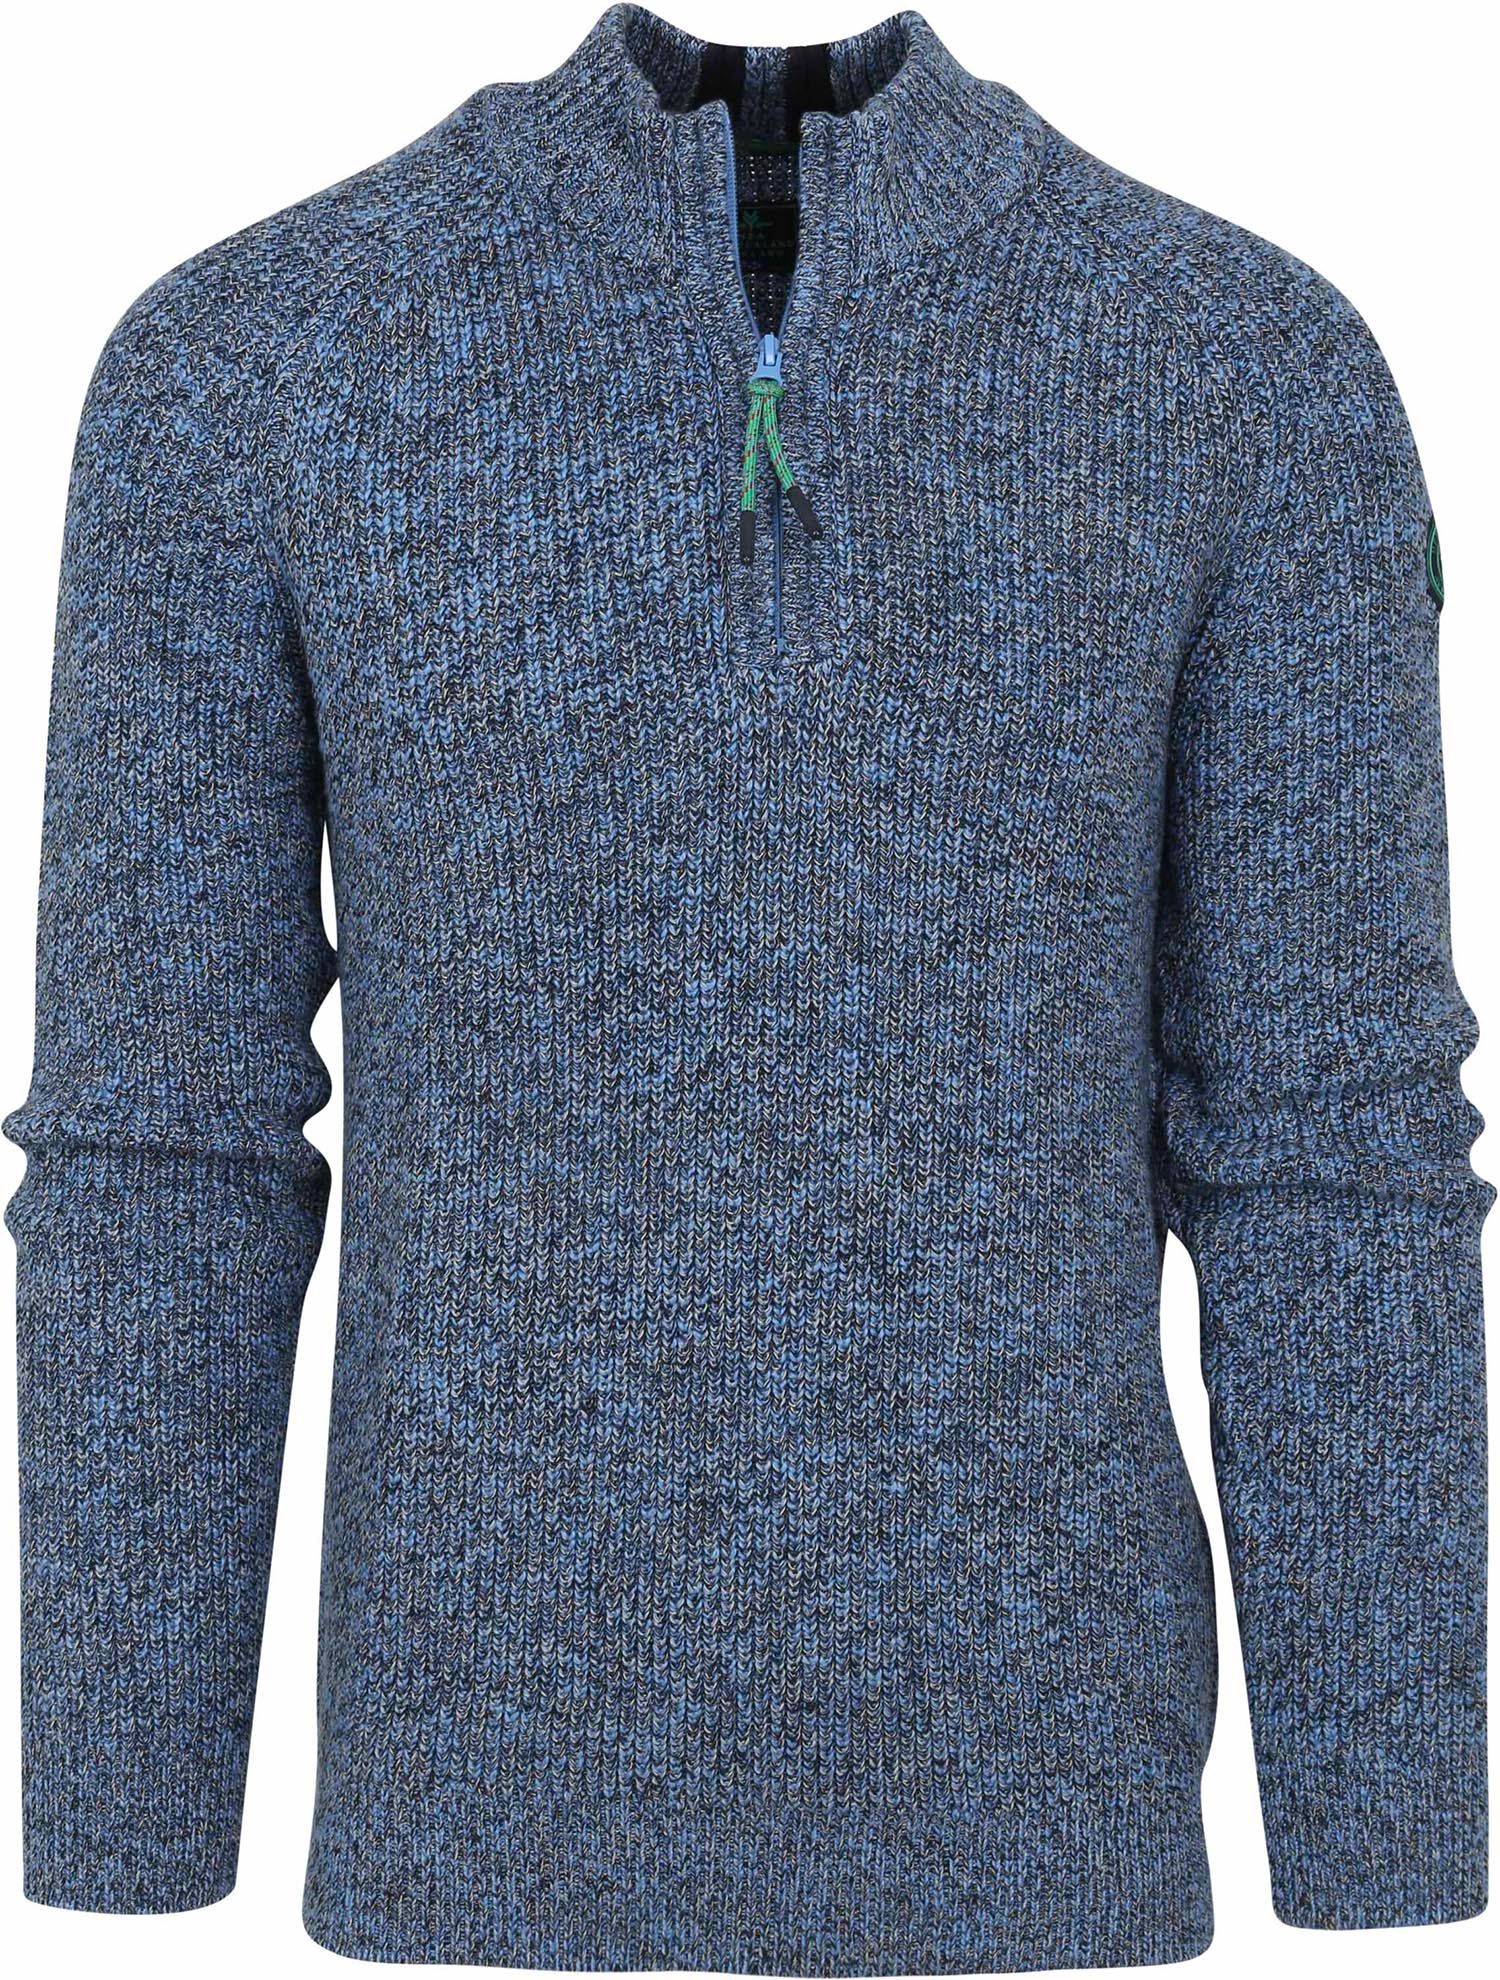 NZA Sweater Tyxell Melange Blue size 3XL